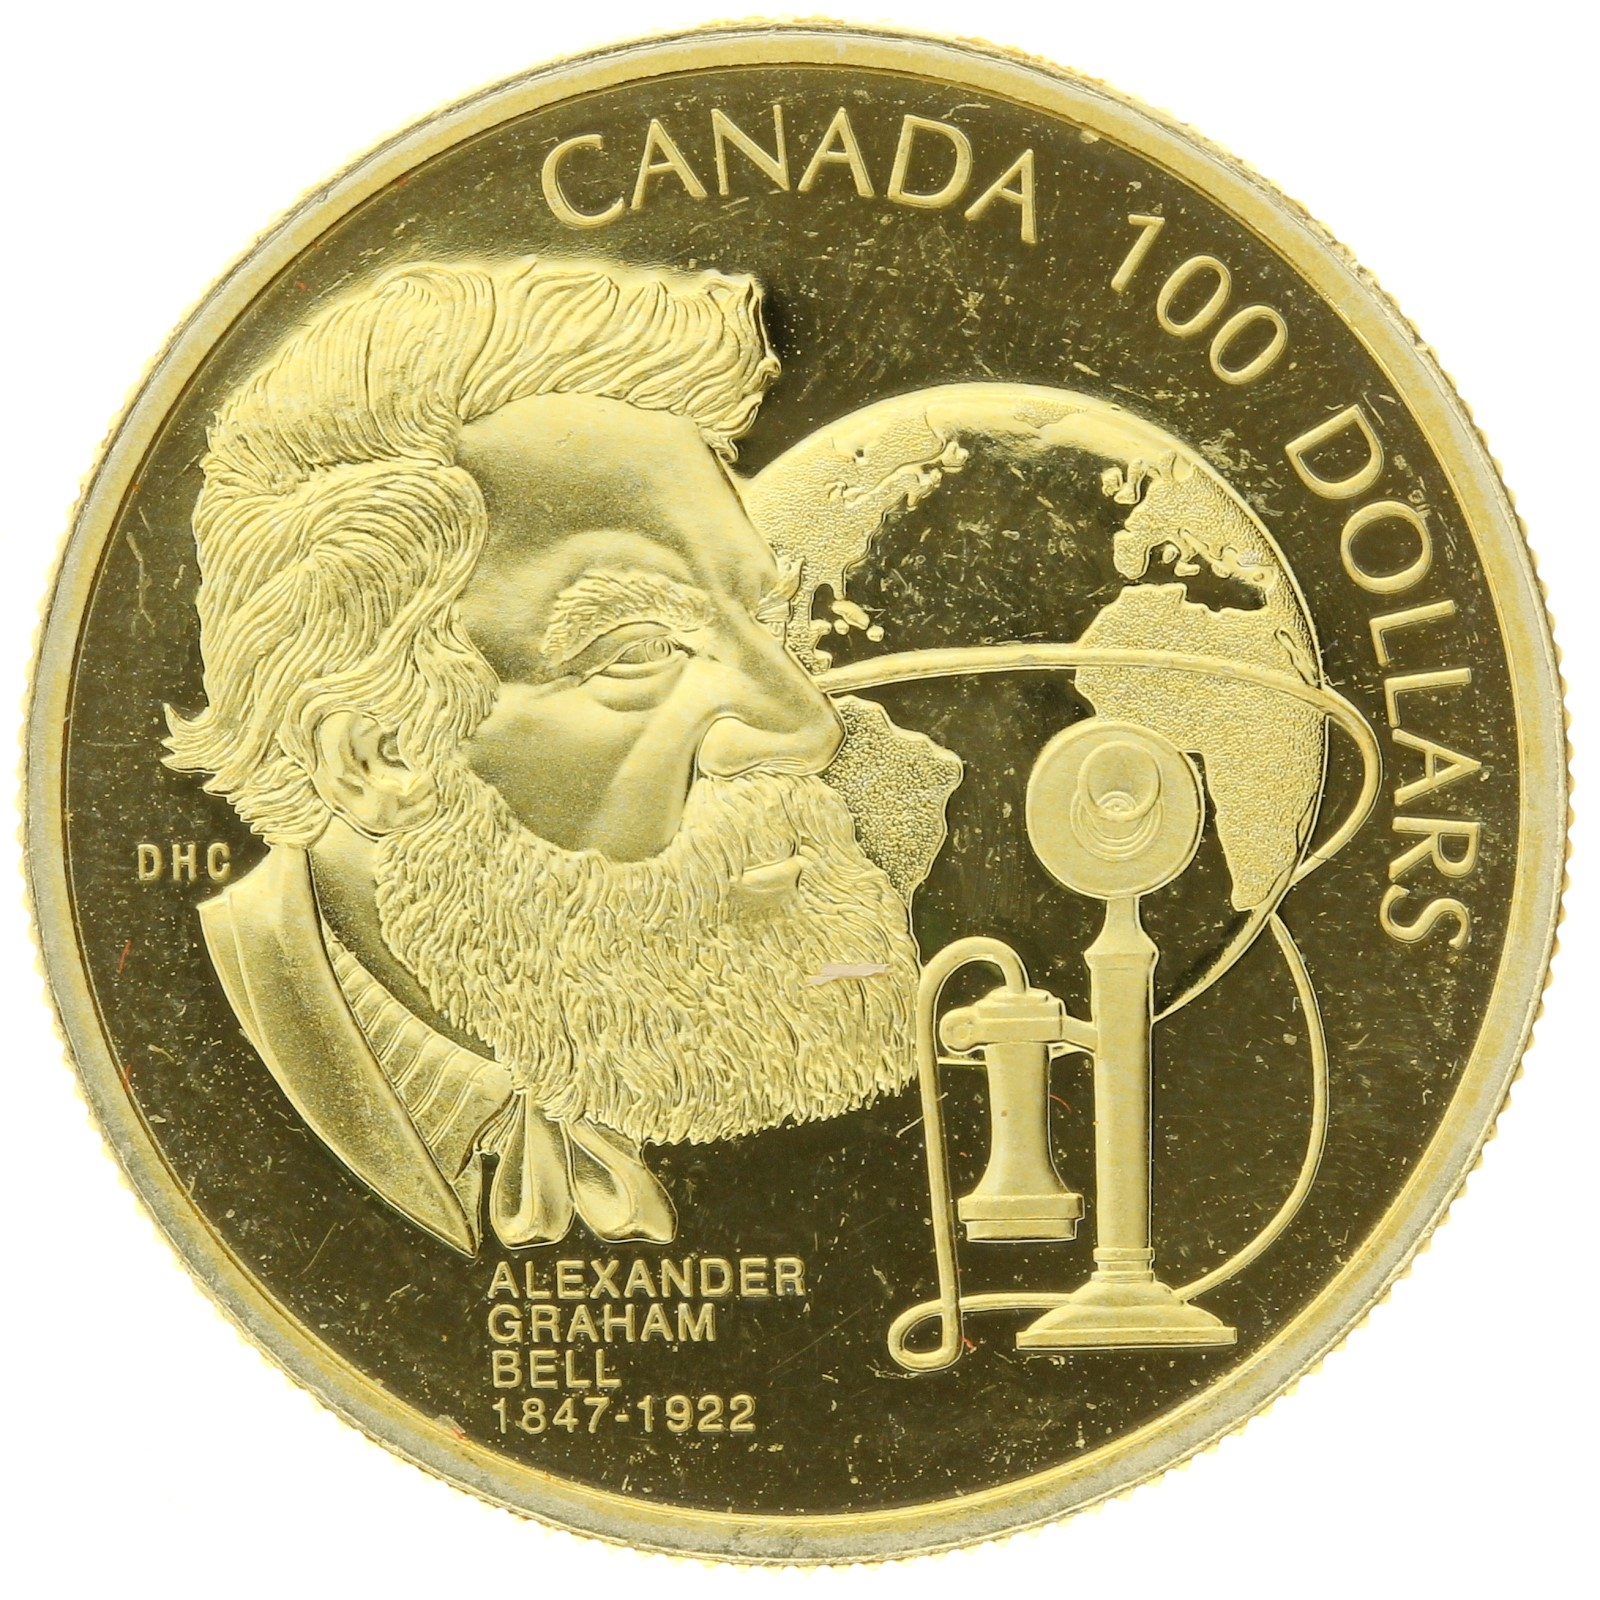 Canada - 100 Dollars - 1997 - Elizabeth II - Alexander Graham Bell - 1/4oz